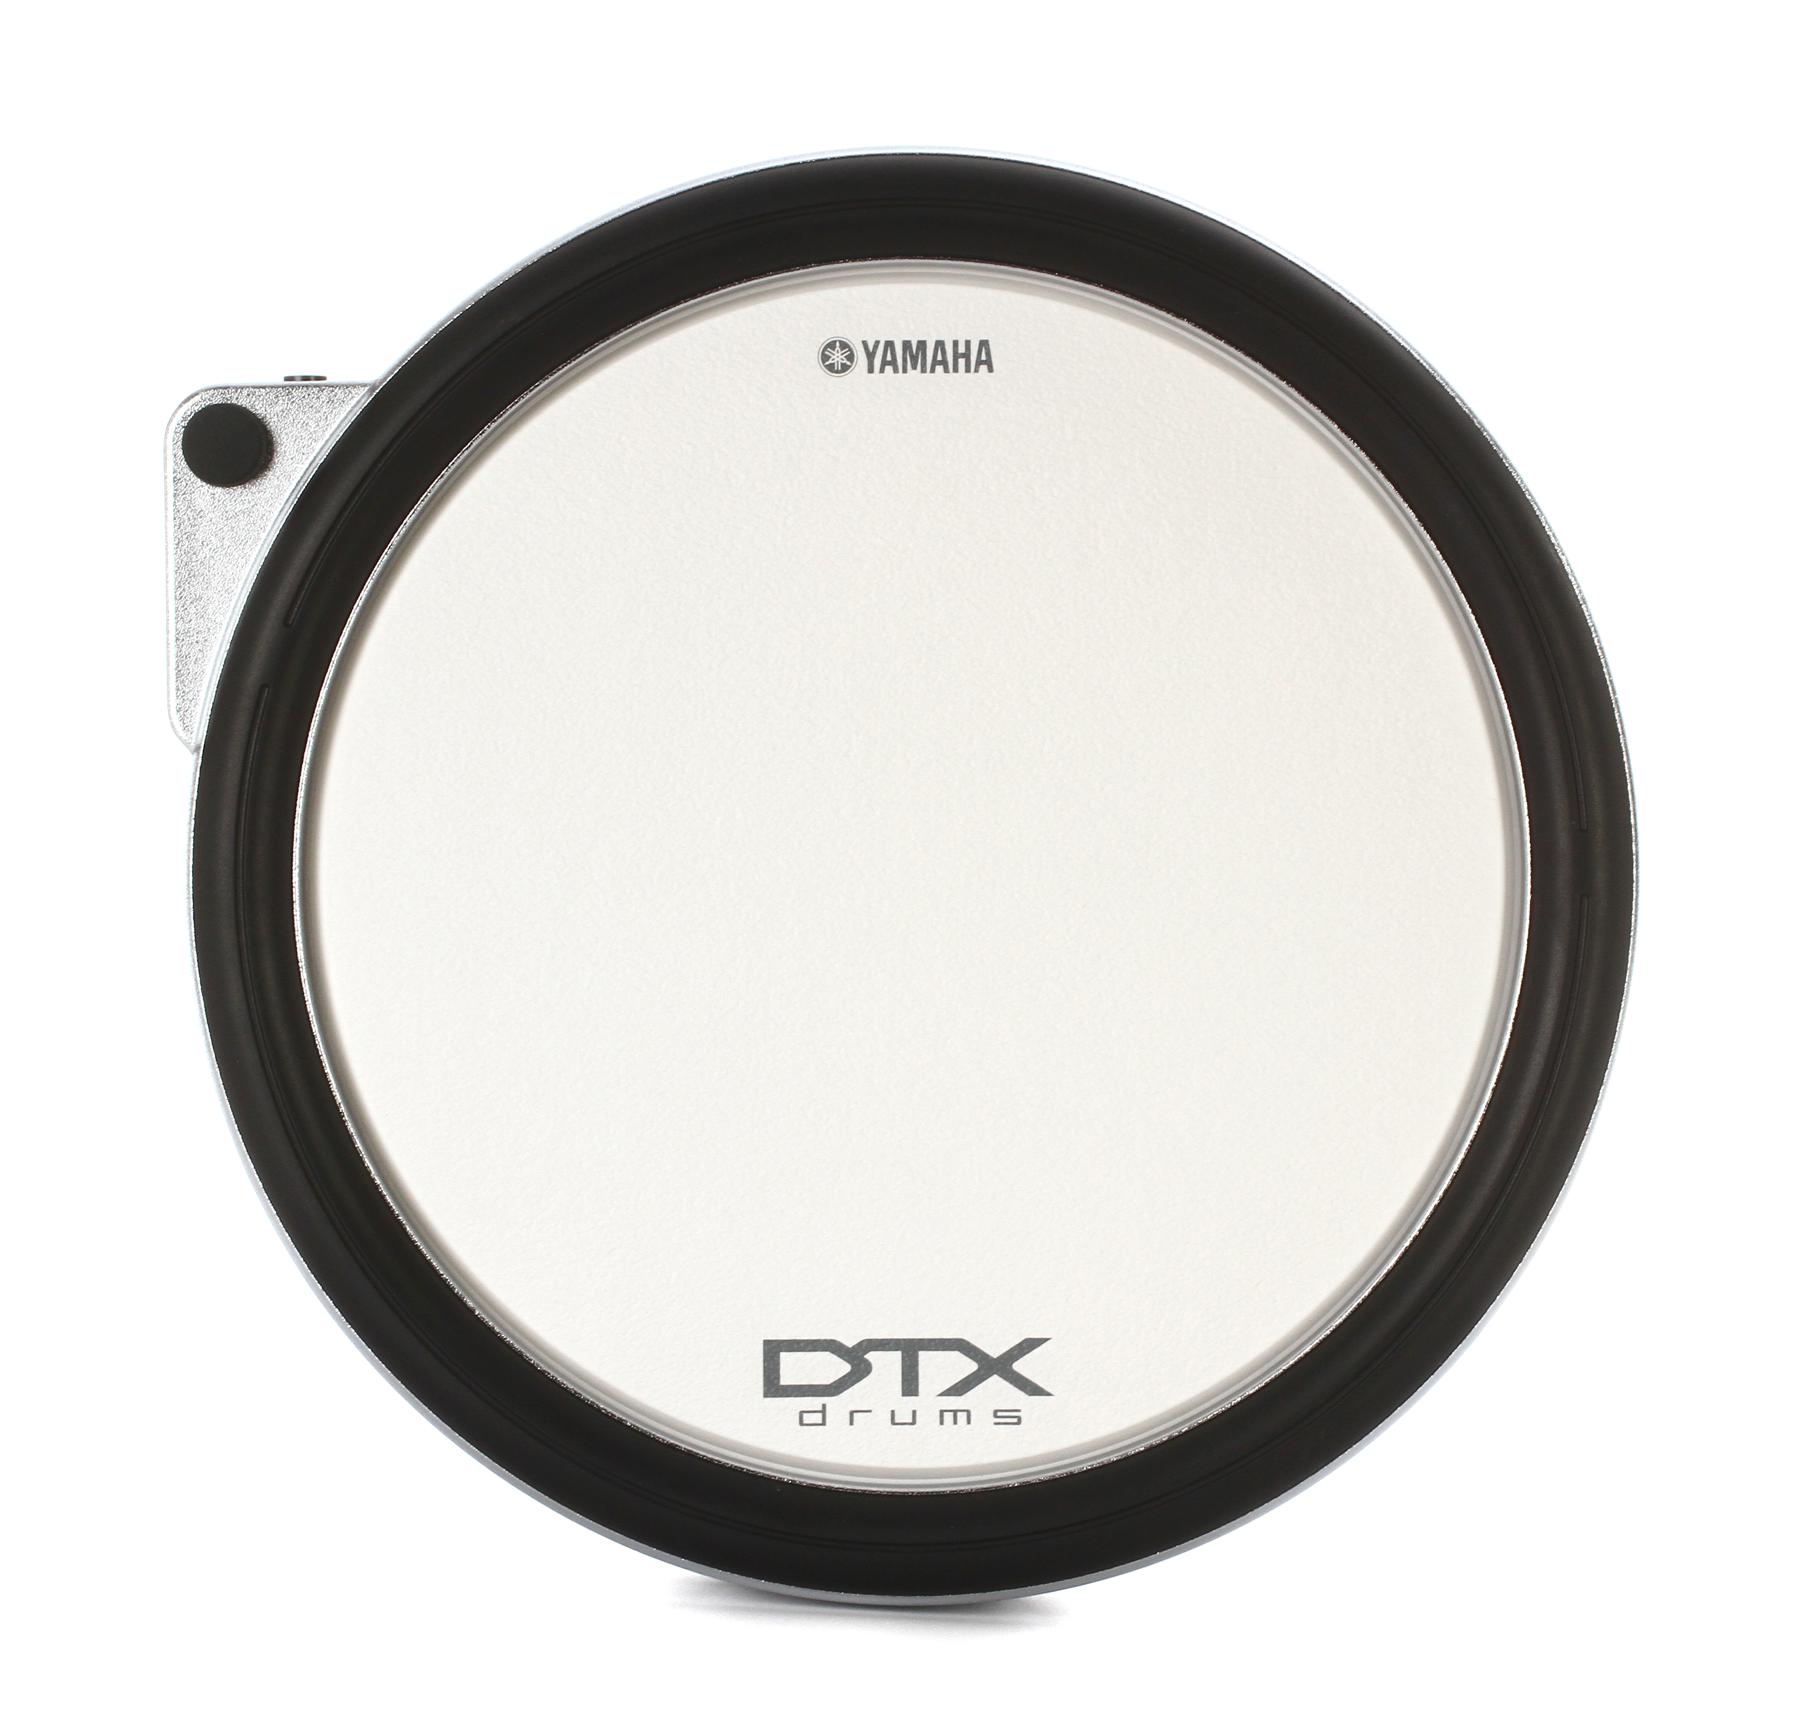 5. Yamaha DTX Series 3-Zone Drum Pad - 12" Snare Drum